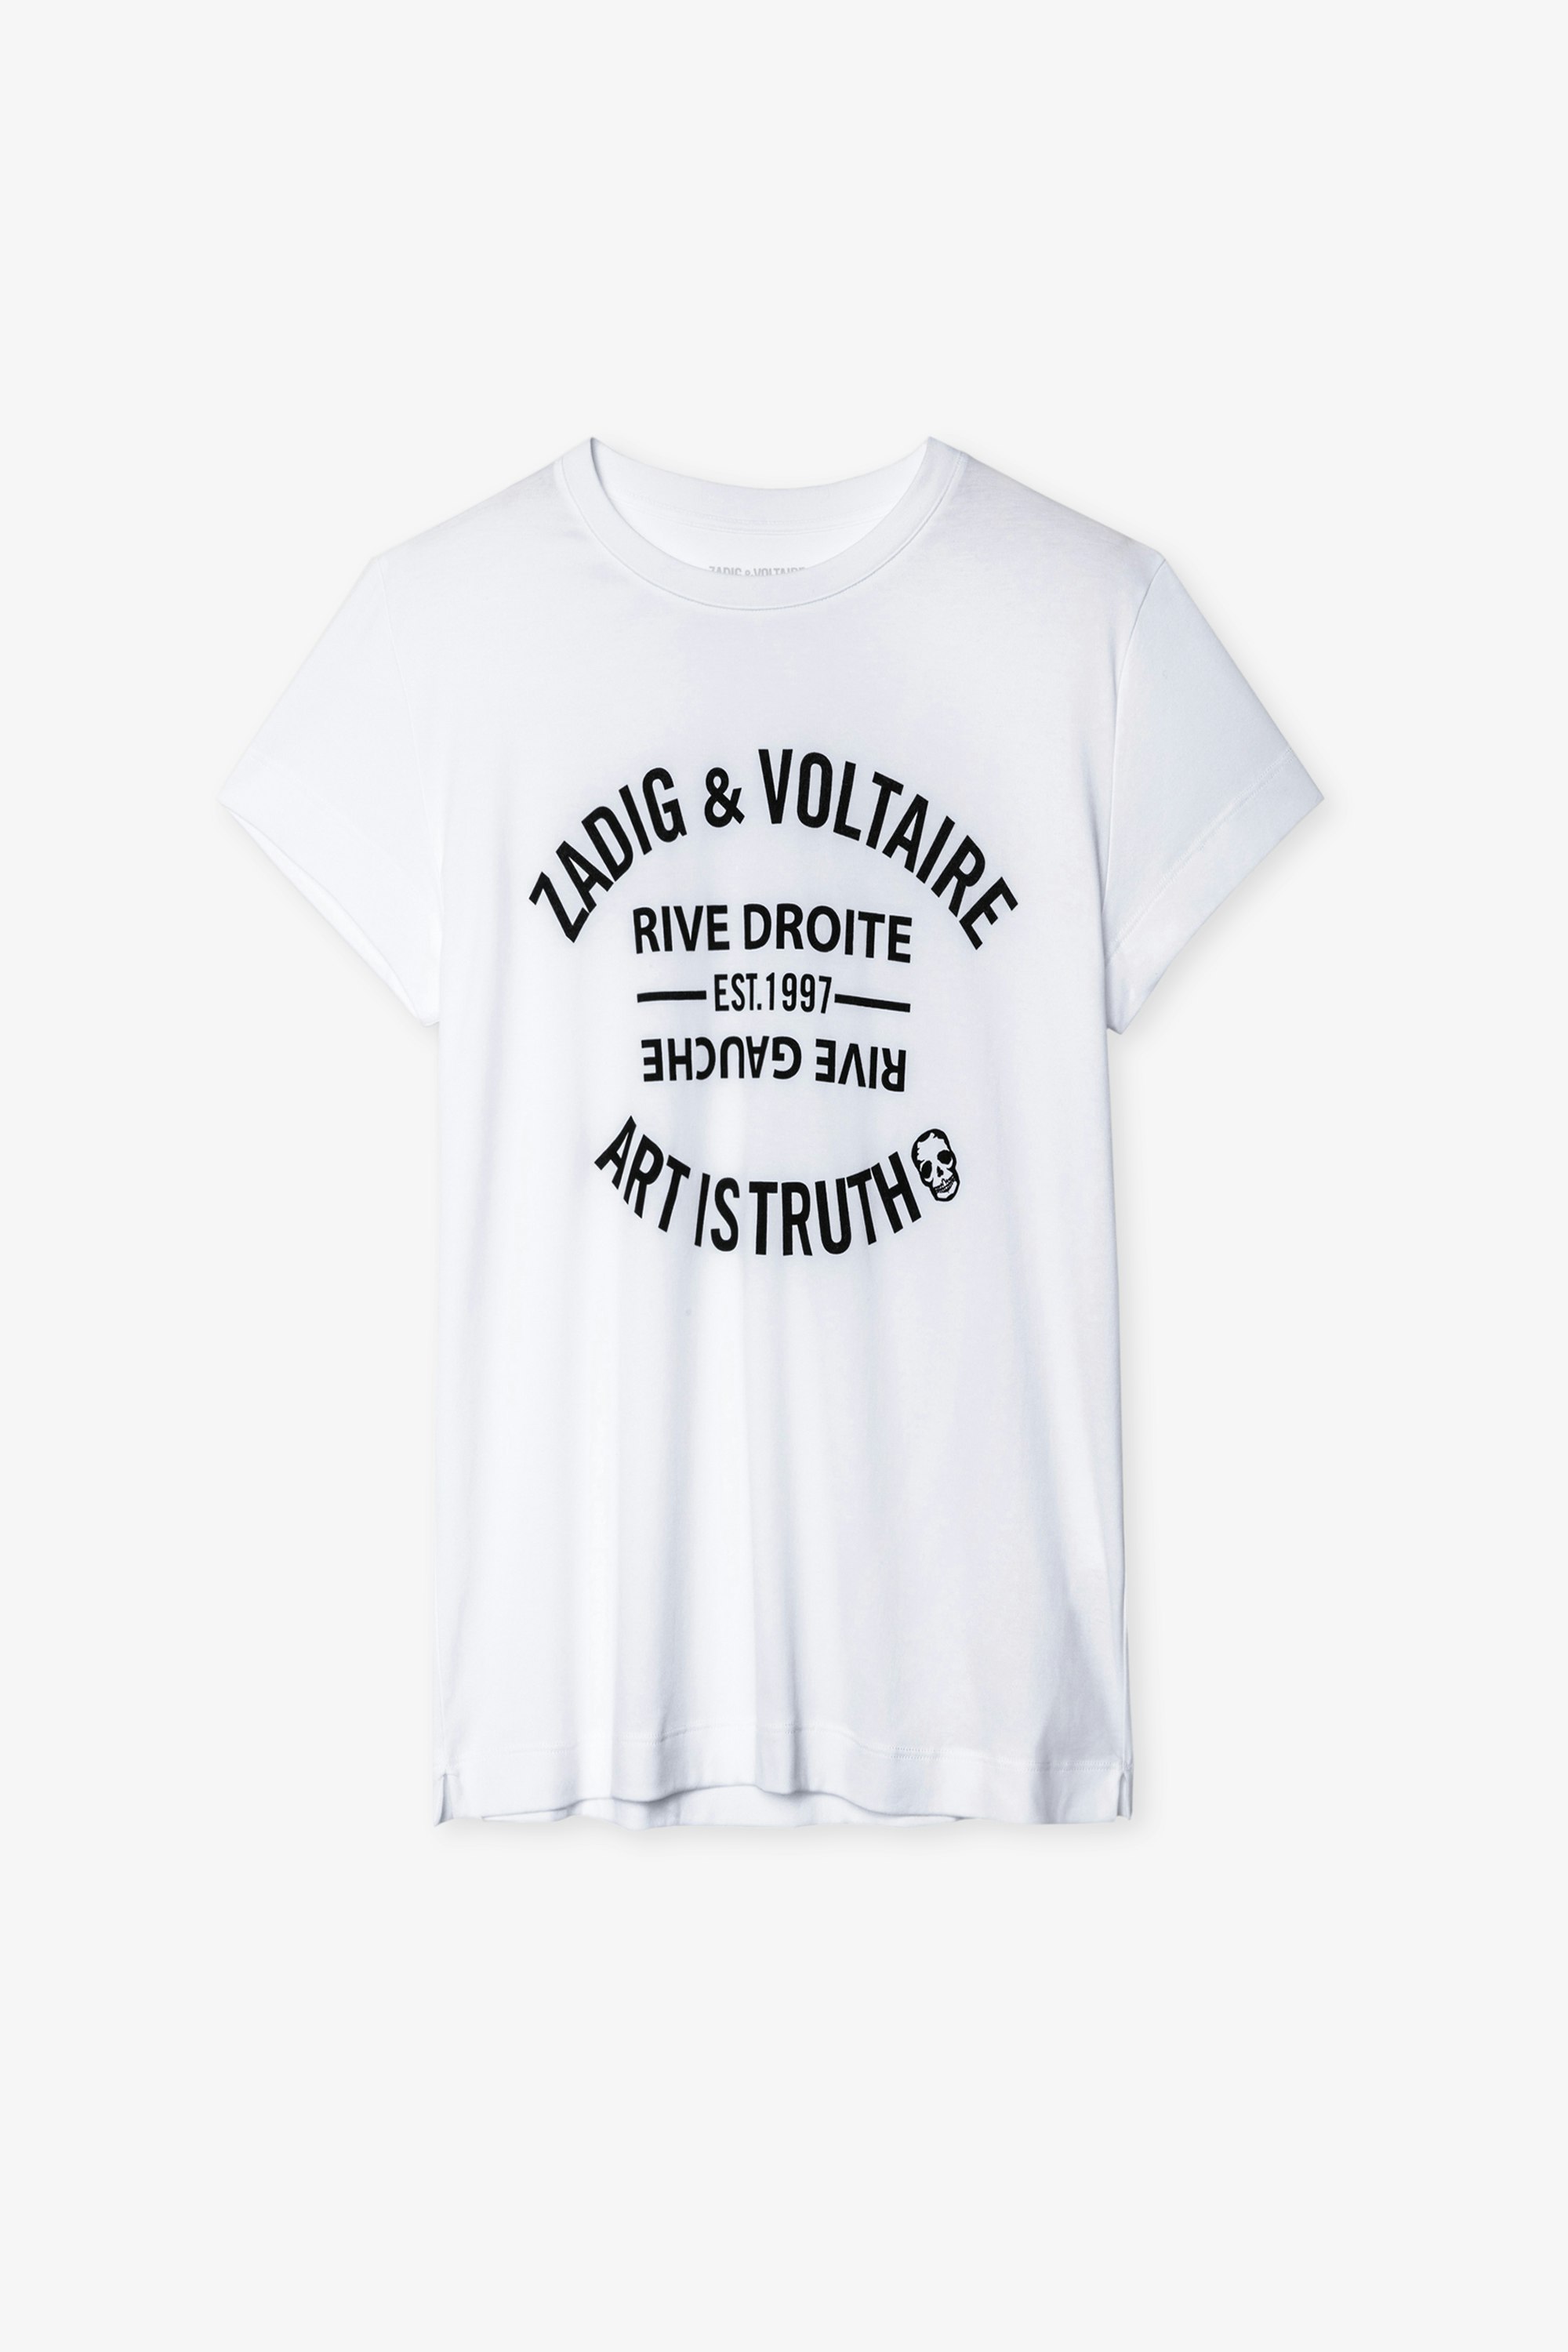 Walk Blason T-shirt - Cotton t-shirt with message